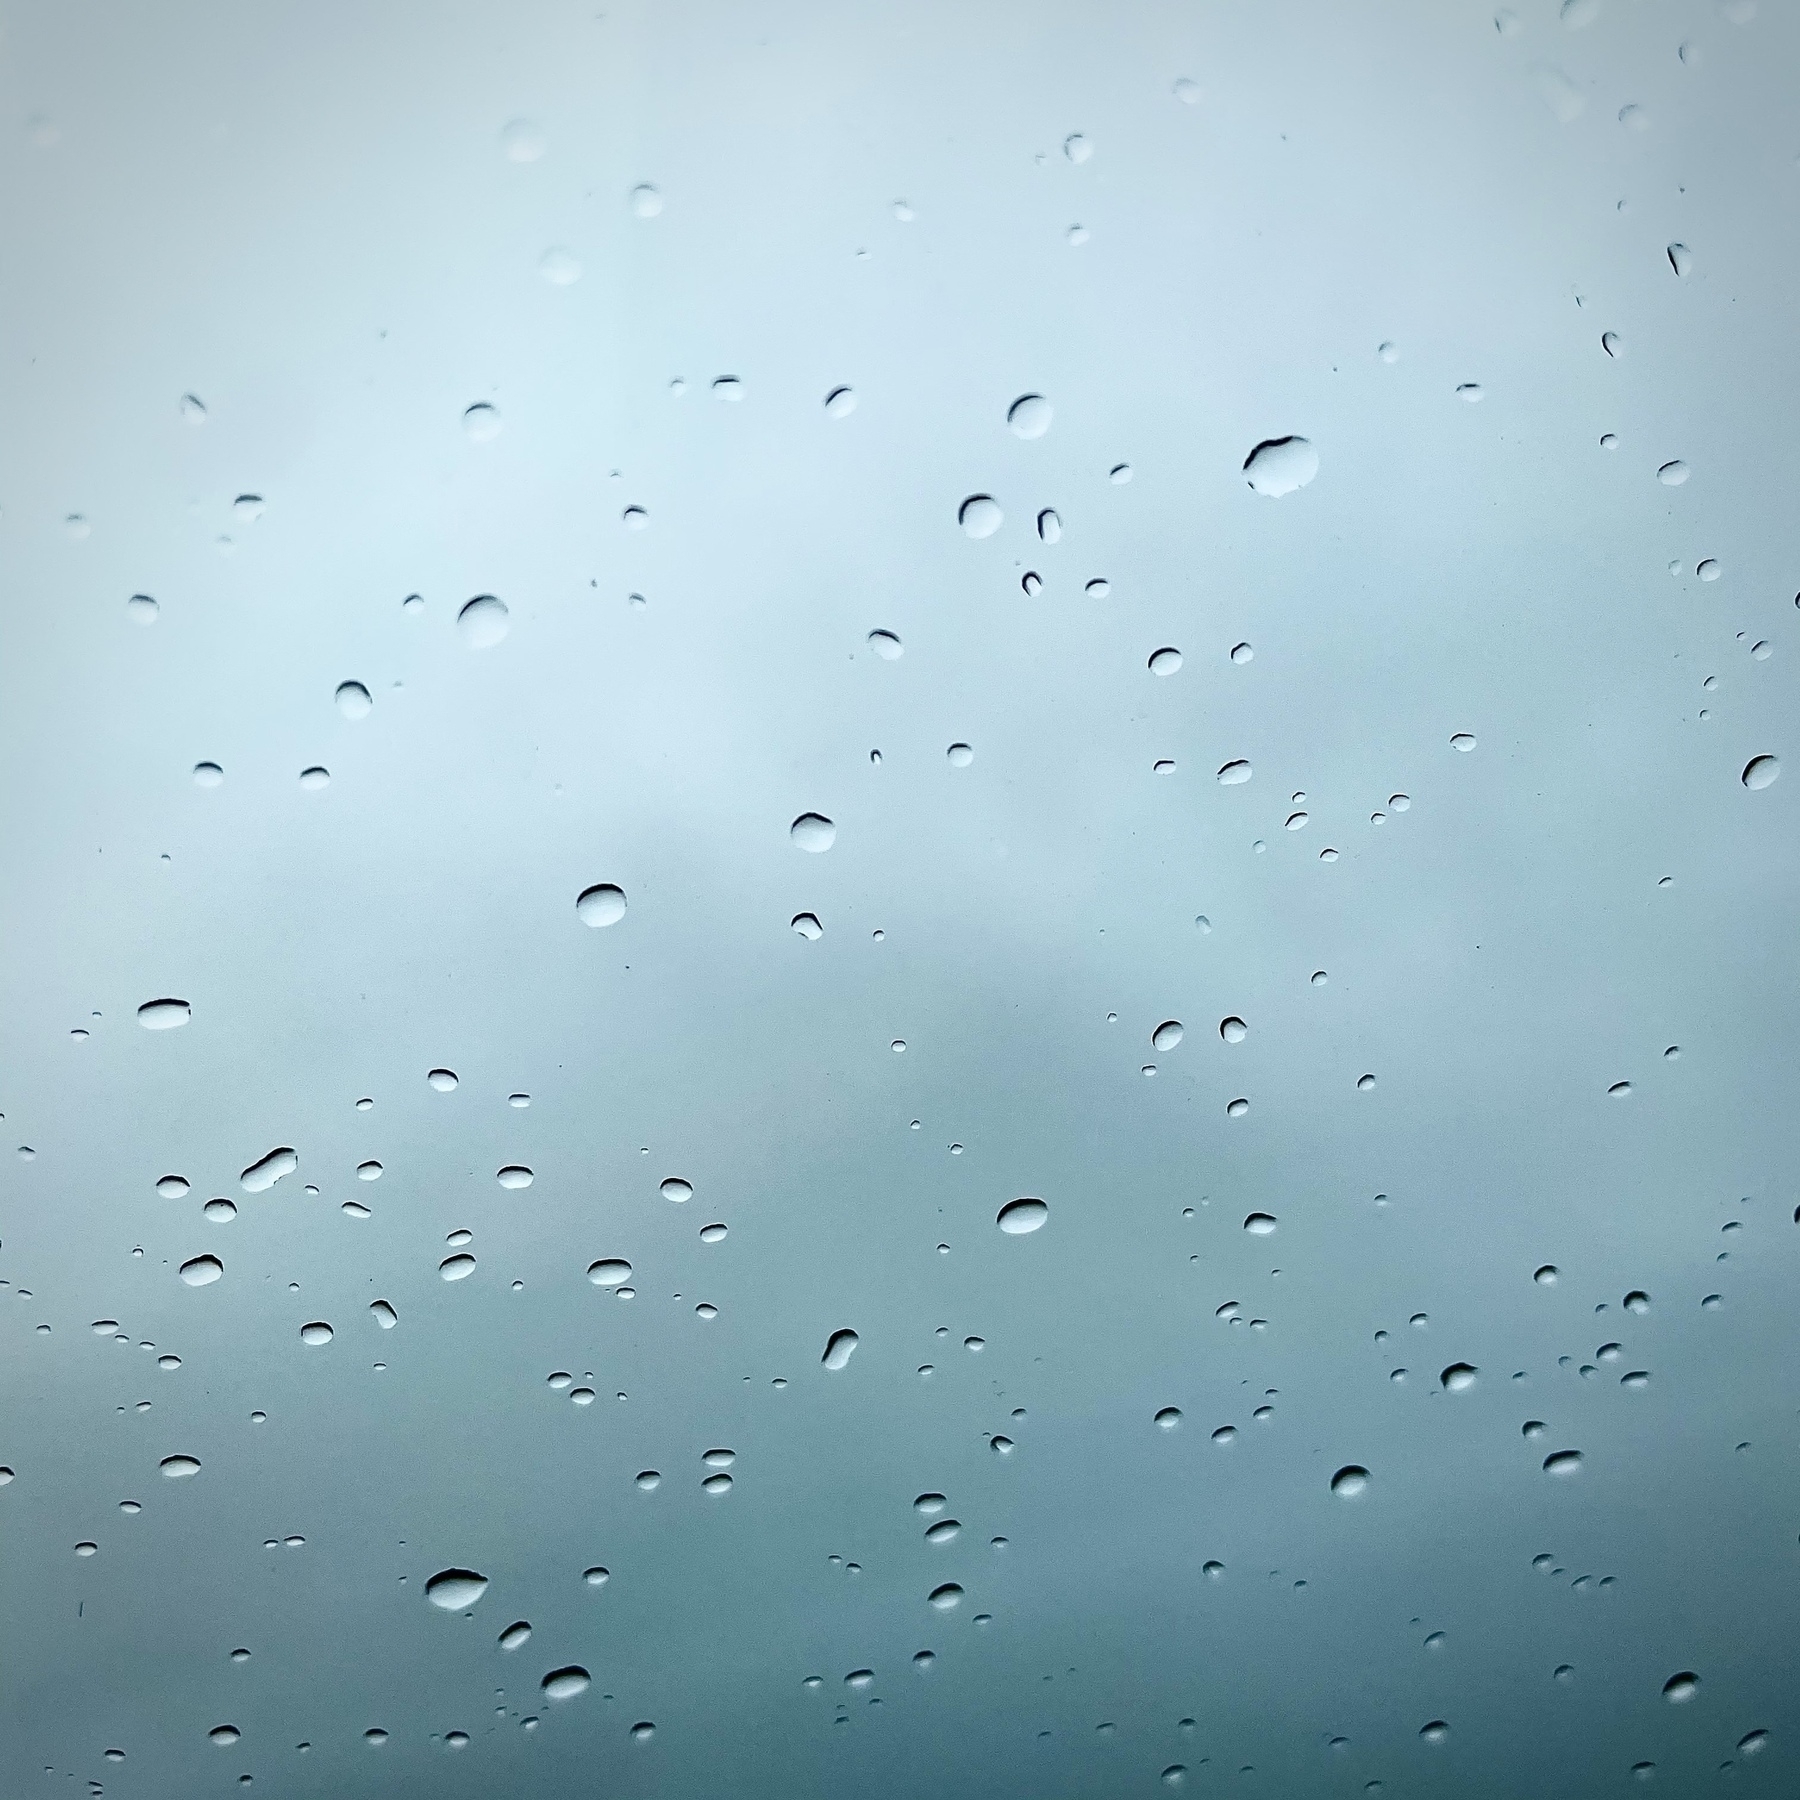 Raindrops on a car windshield.